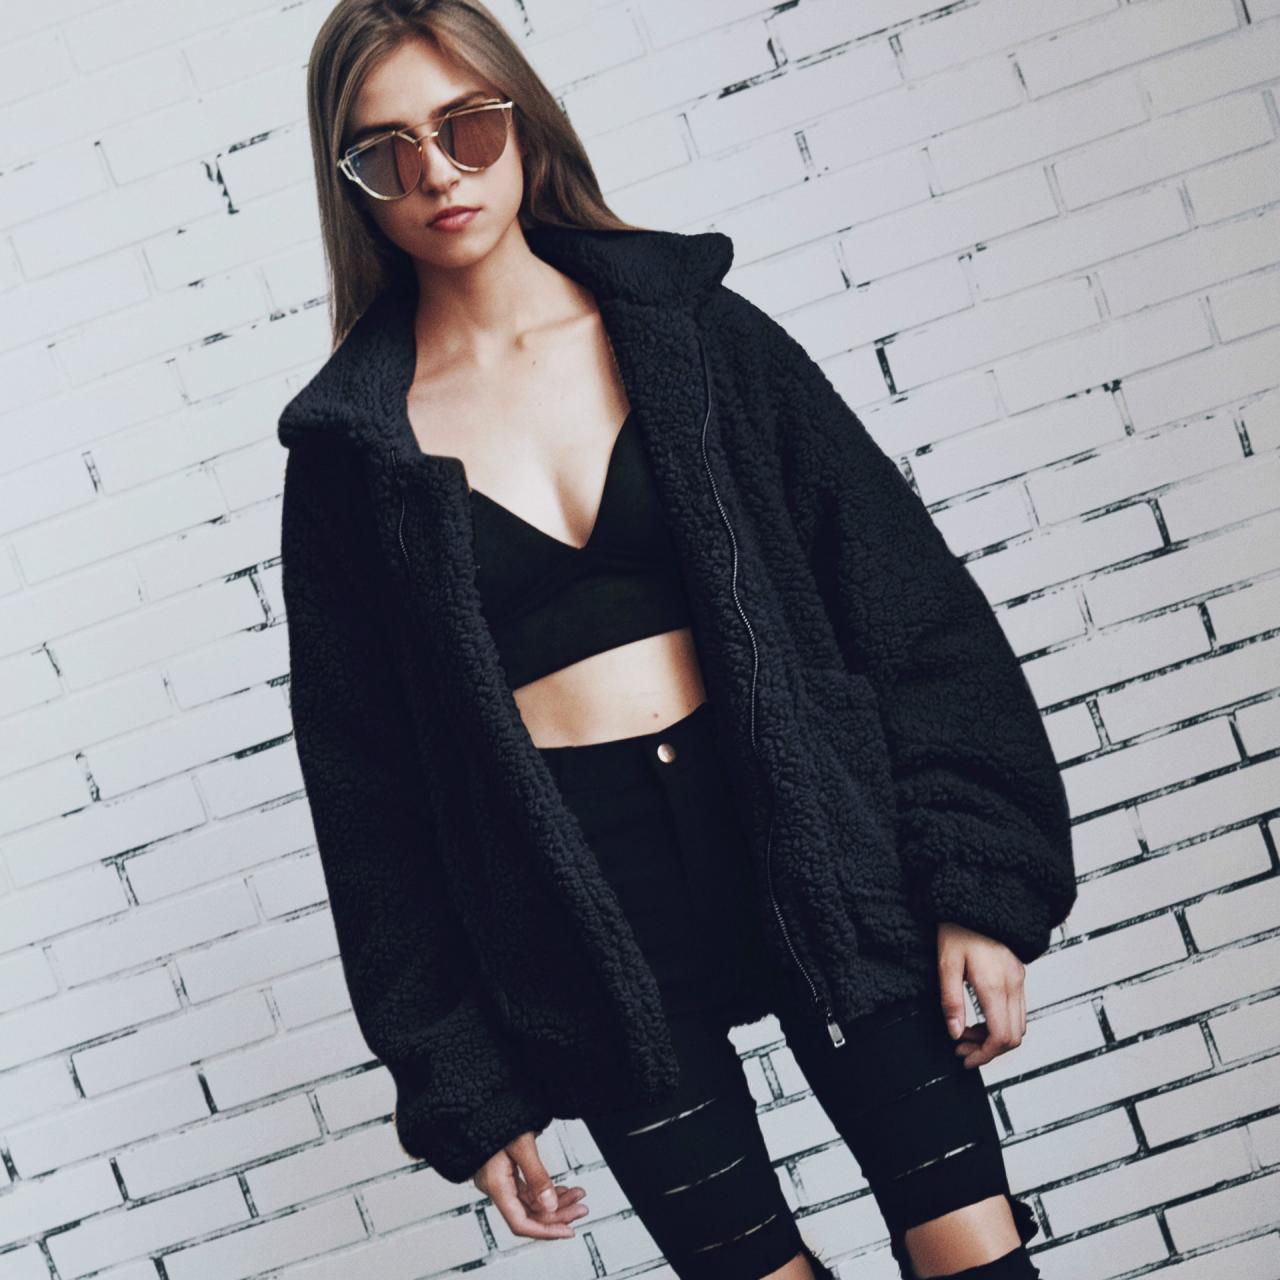  Women Faux Fur Coat Winter Turn-down Collar Thick Warm Casual Long Sleeve Plush Jacket Outwears black